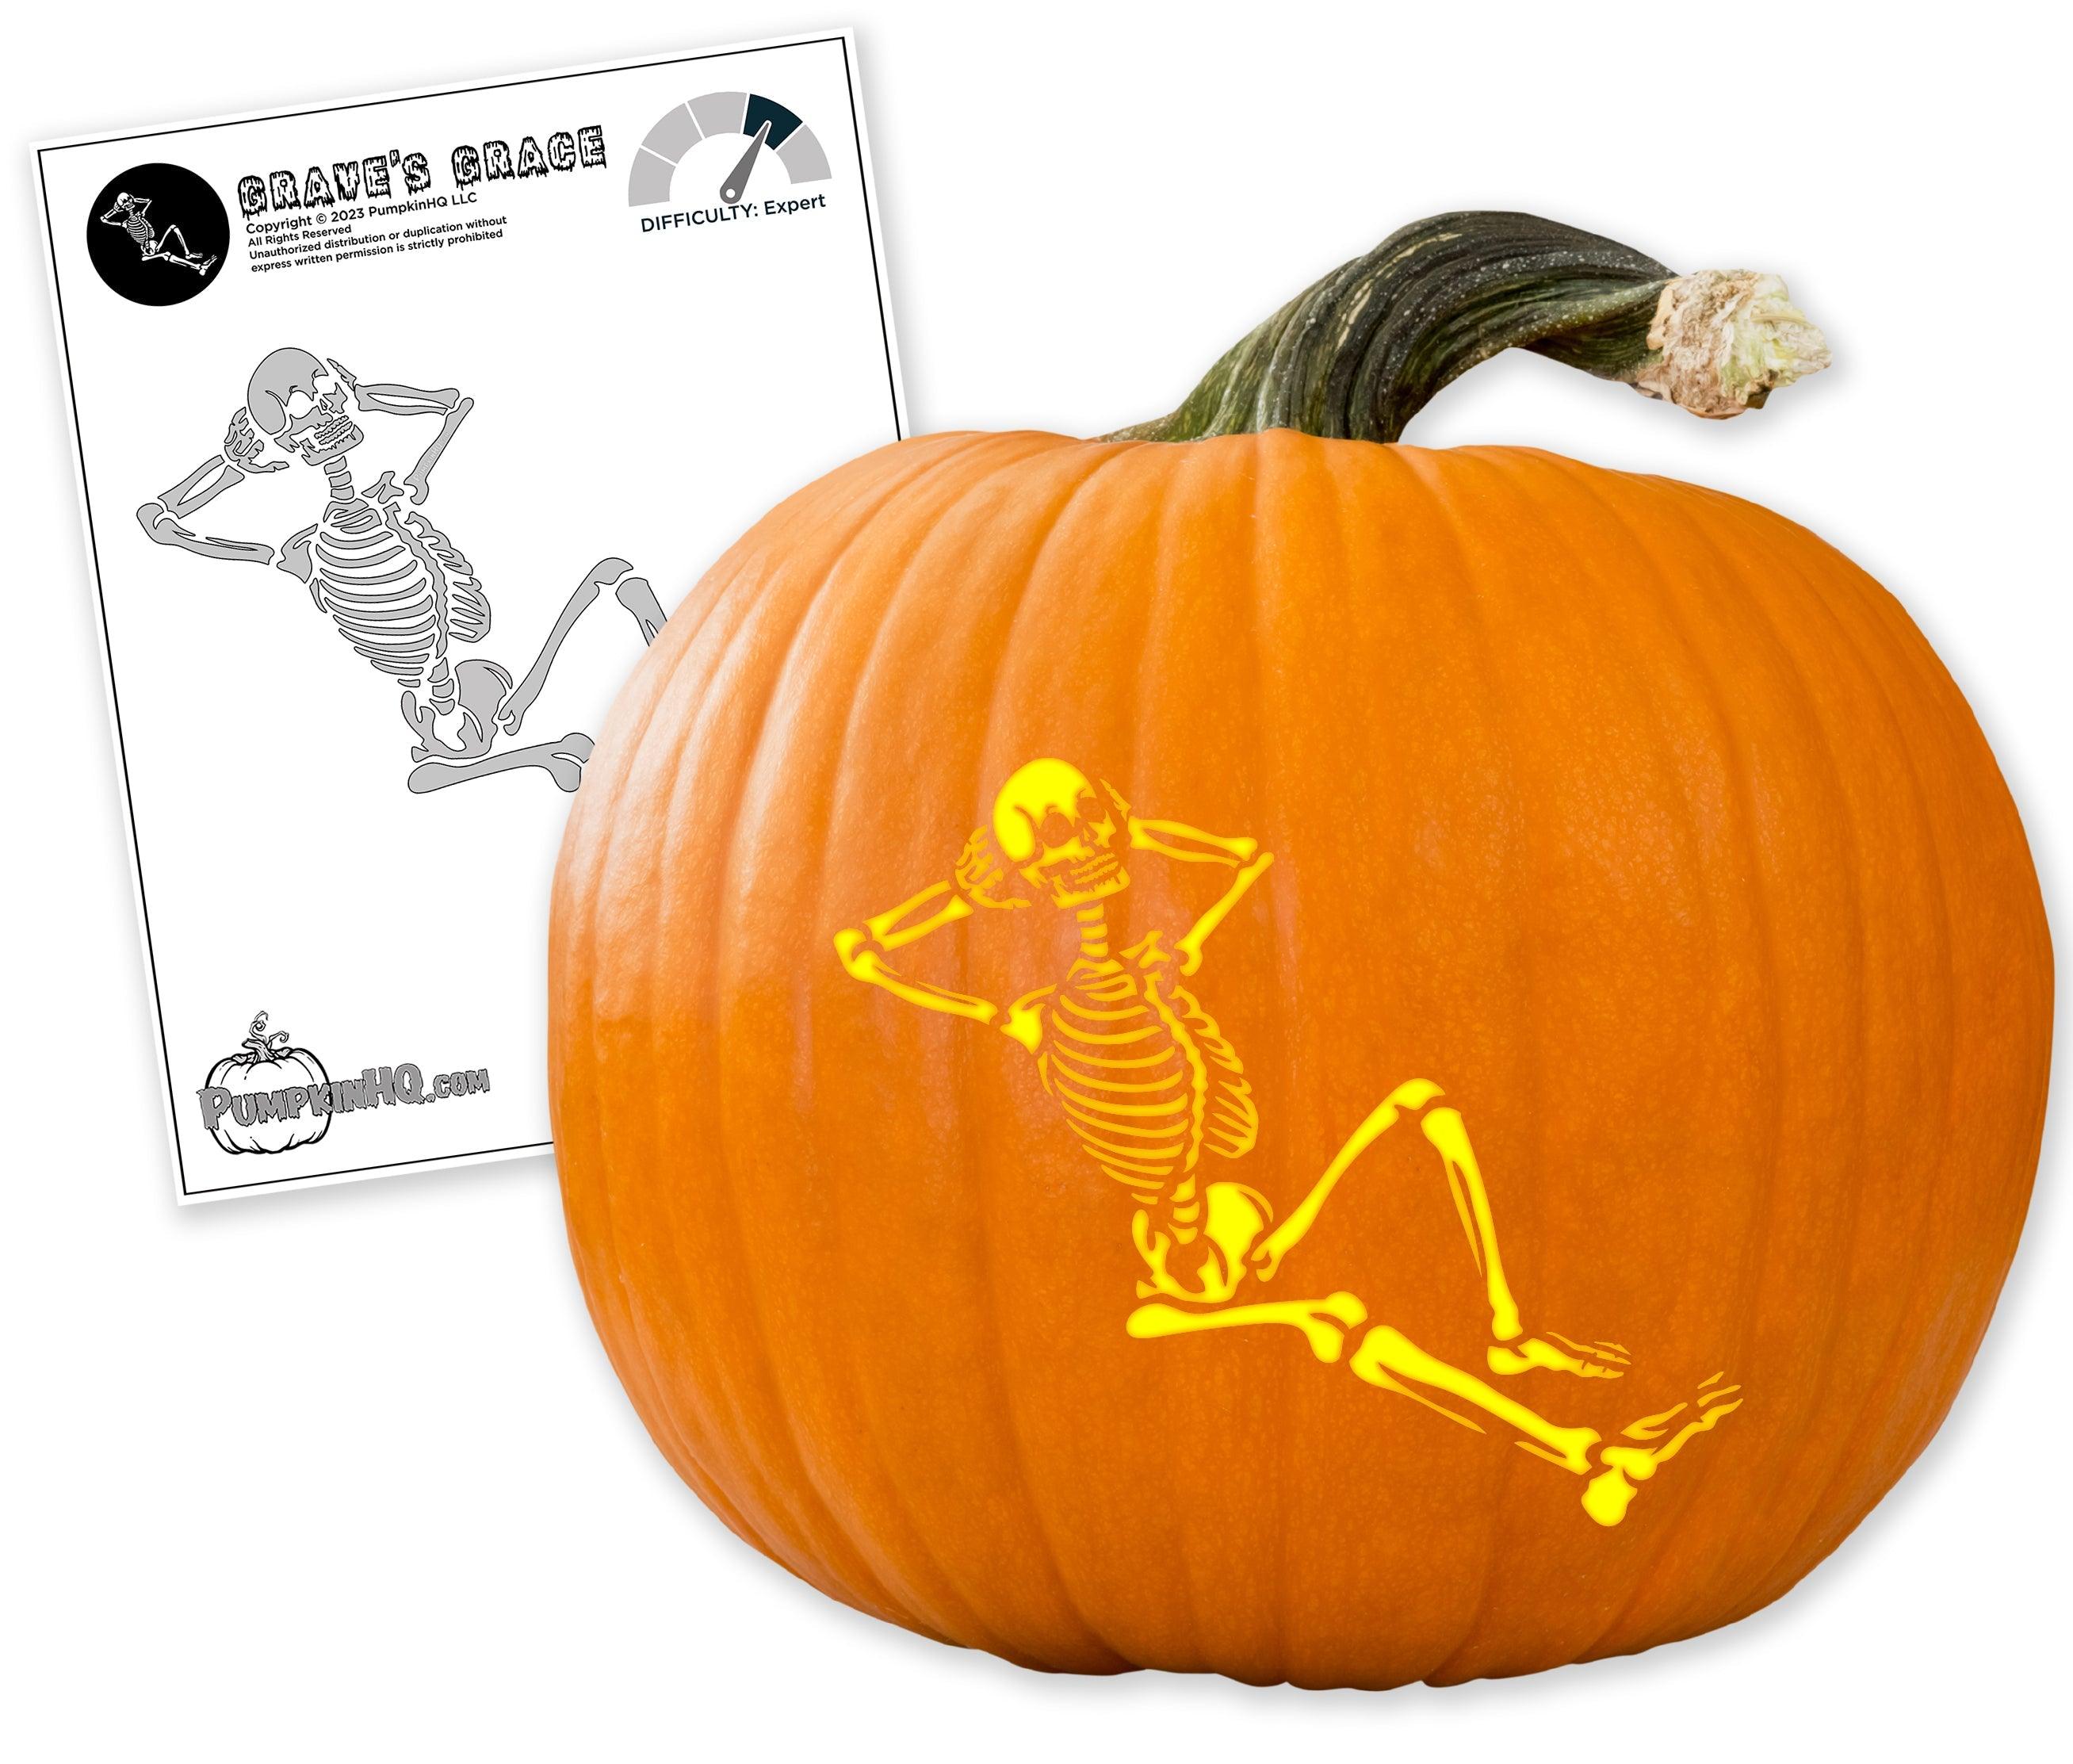 skeleton pumpkin carving ideas